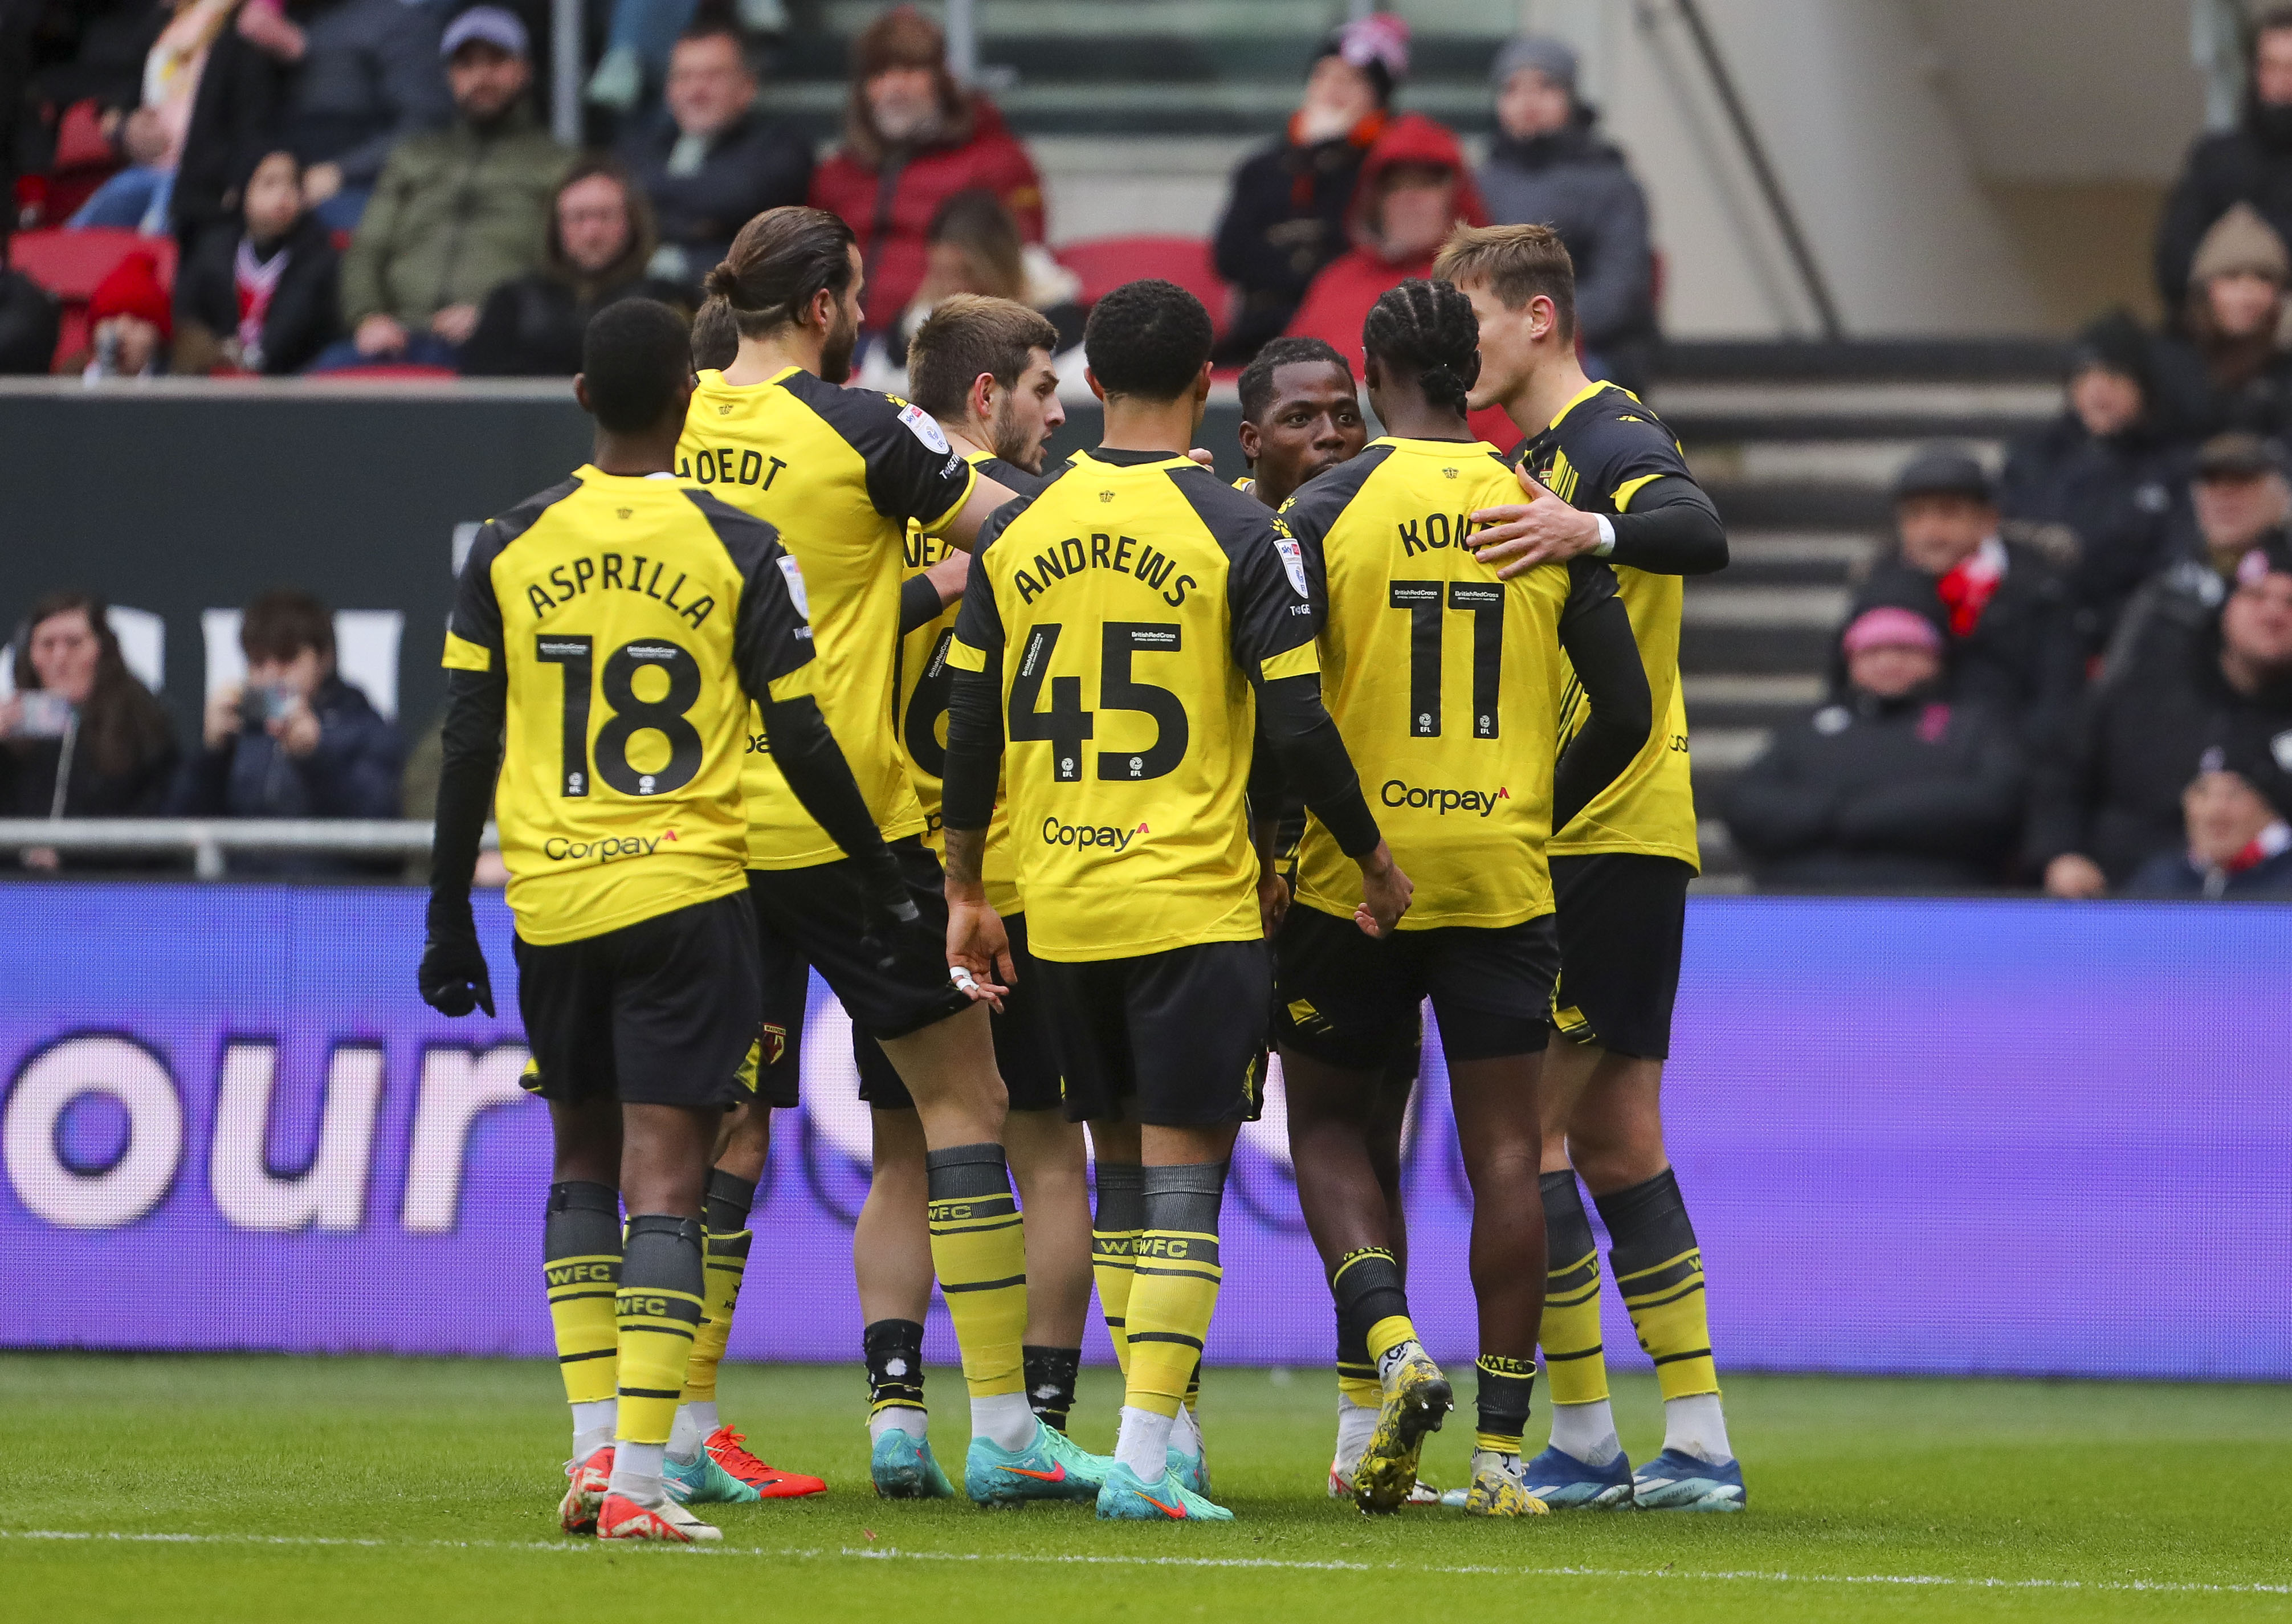 Several Watford players celebrate after scoring at Bristol City's Ashton Gate